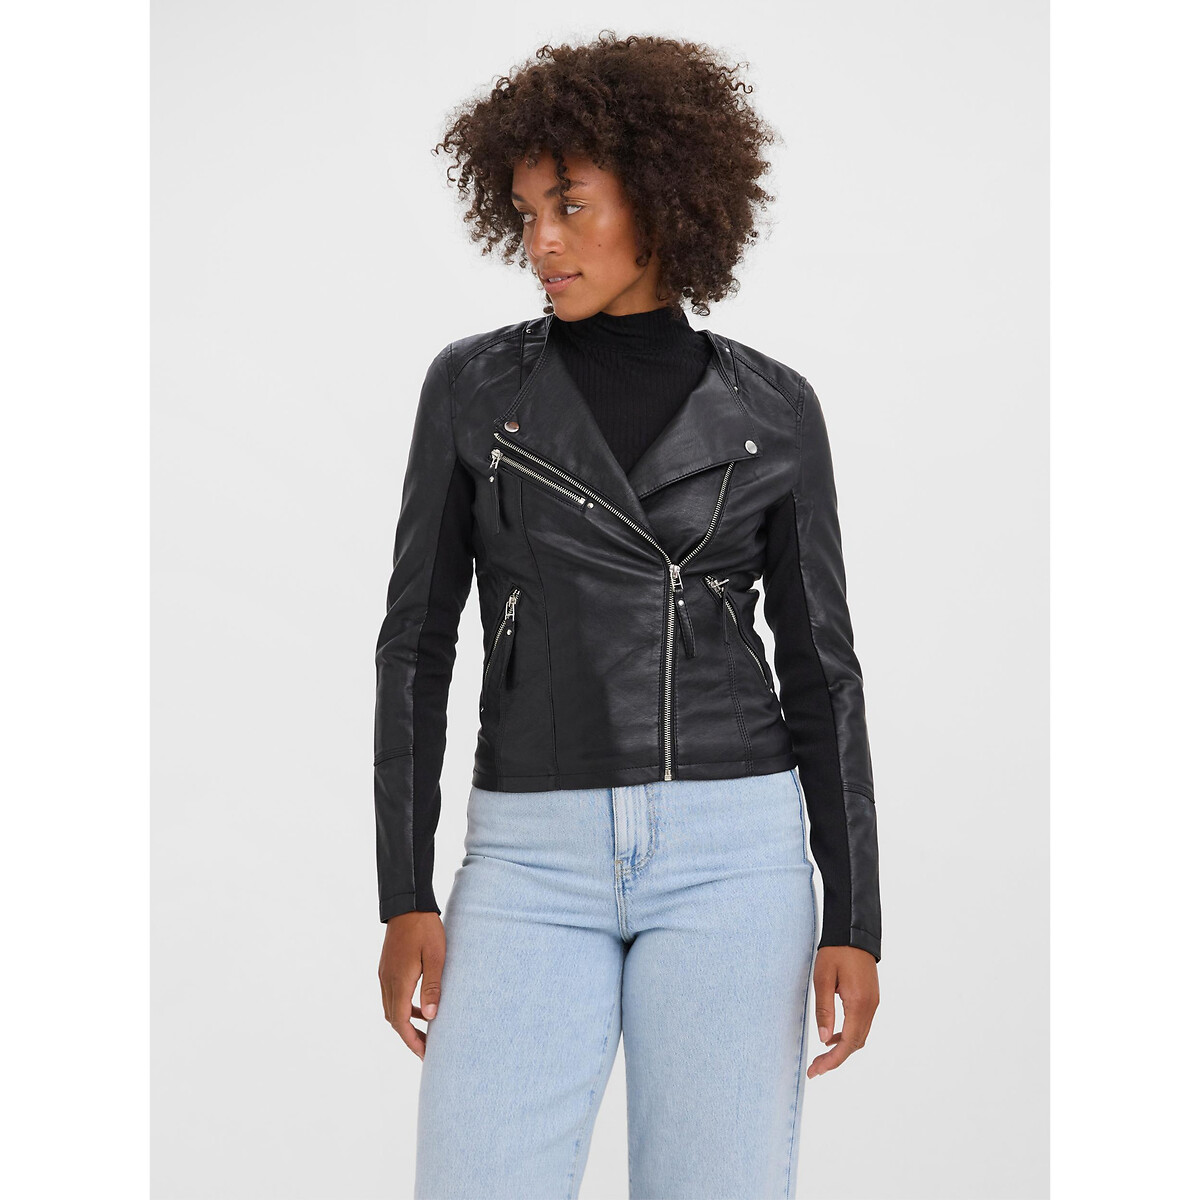 Faux leather jacket black Vero Moda | La Redoute